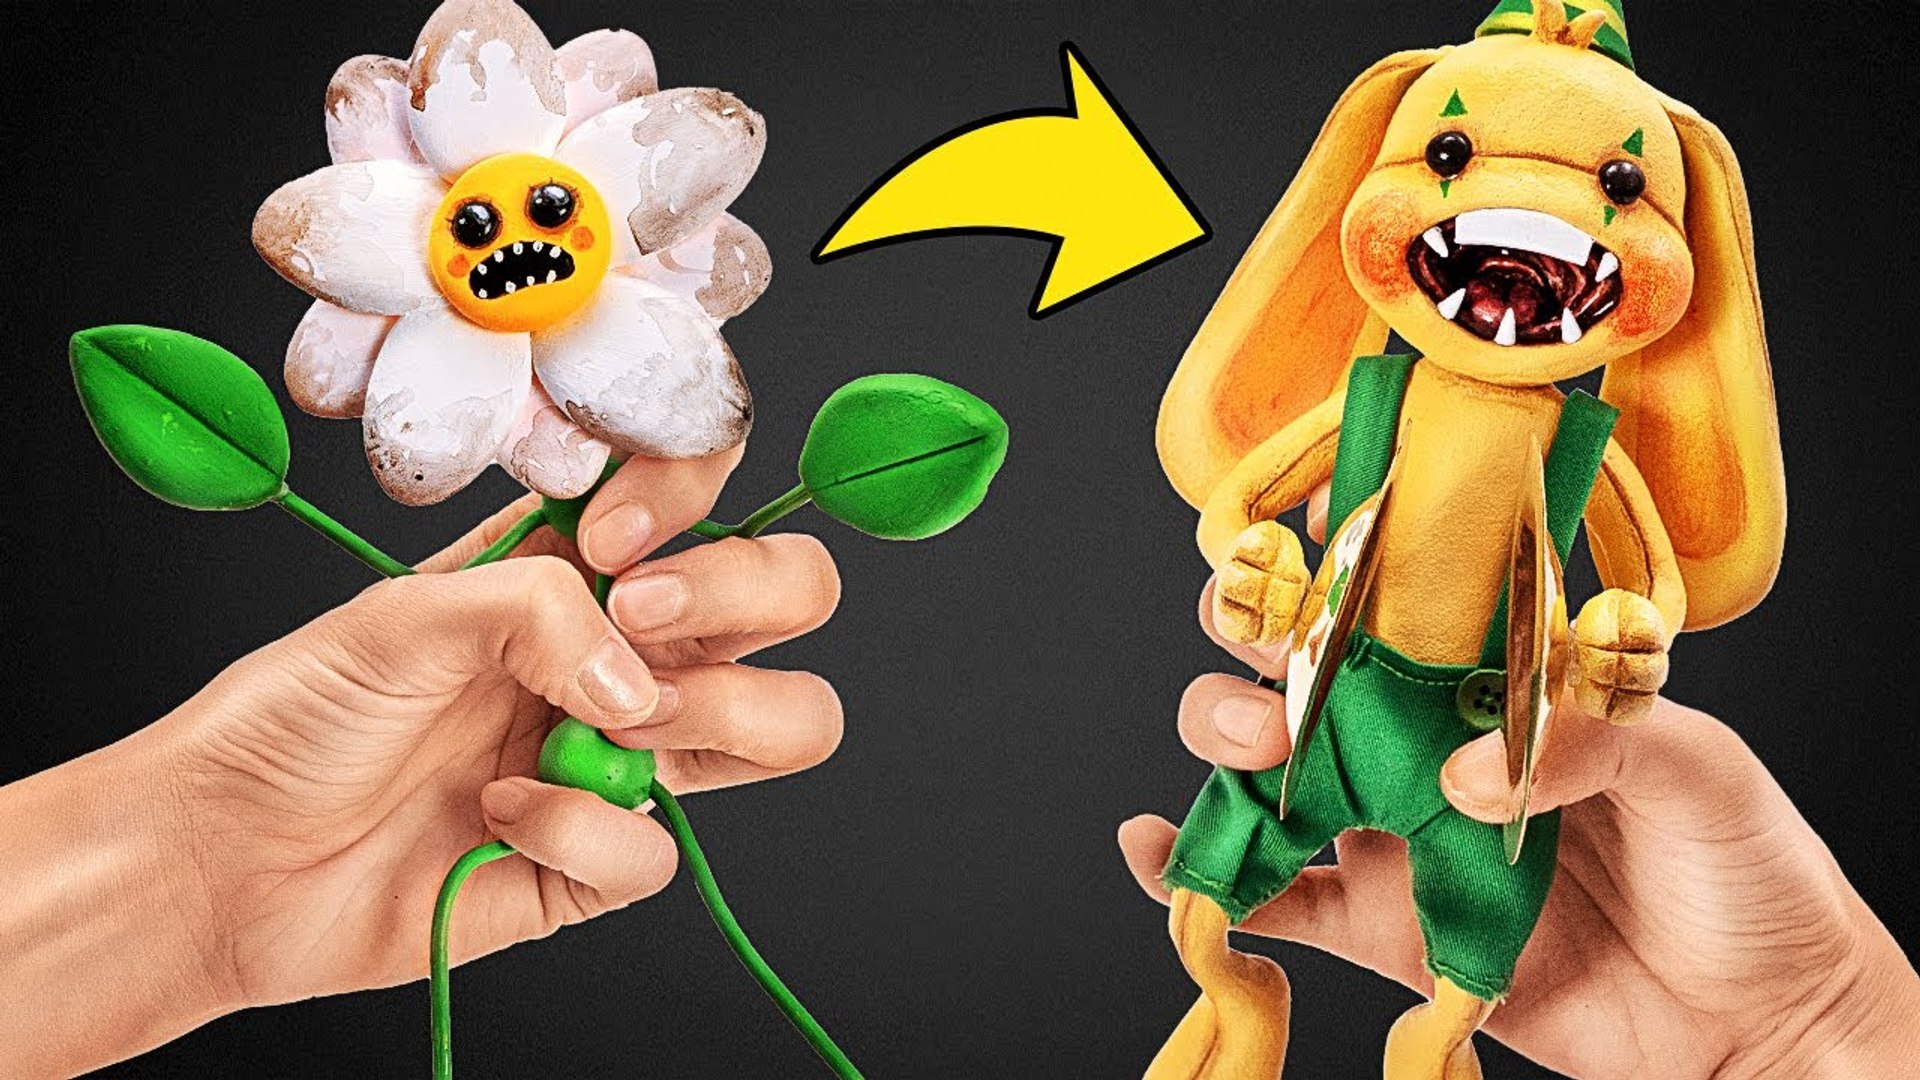 Plush - Making Bunzo Bunny - DIY. Toy Plush Poppy Playtime chapter 2! *How  To Make*